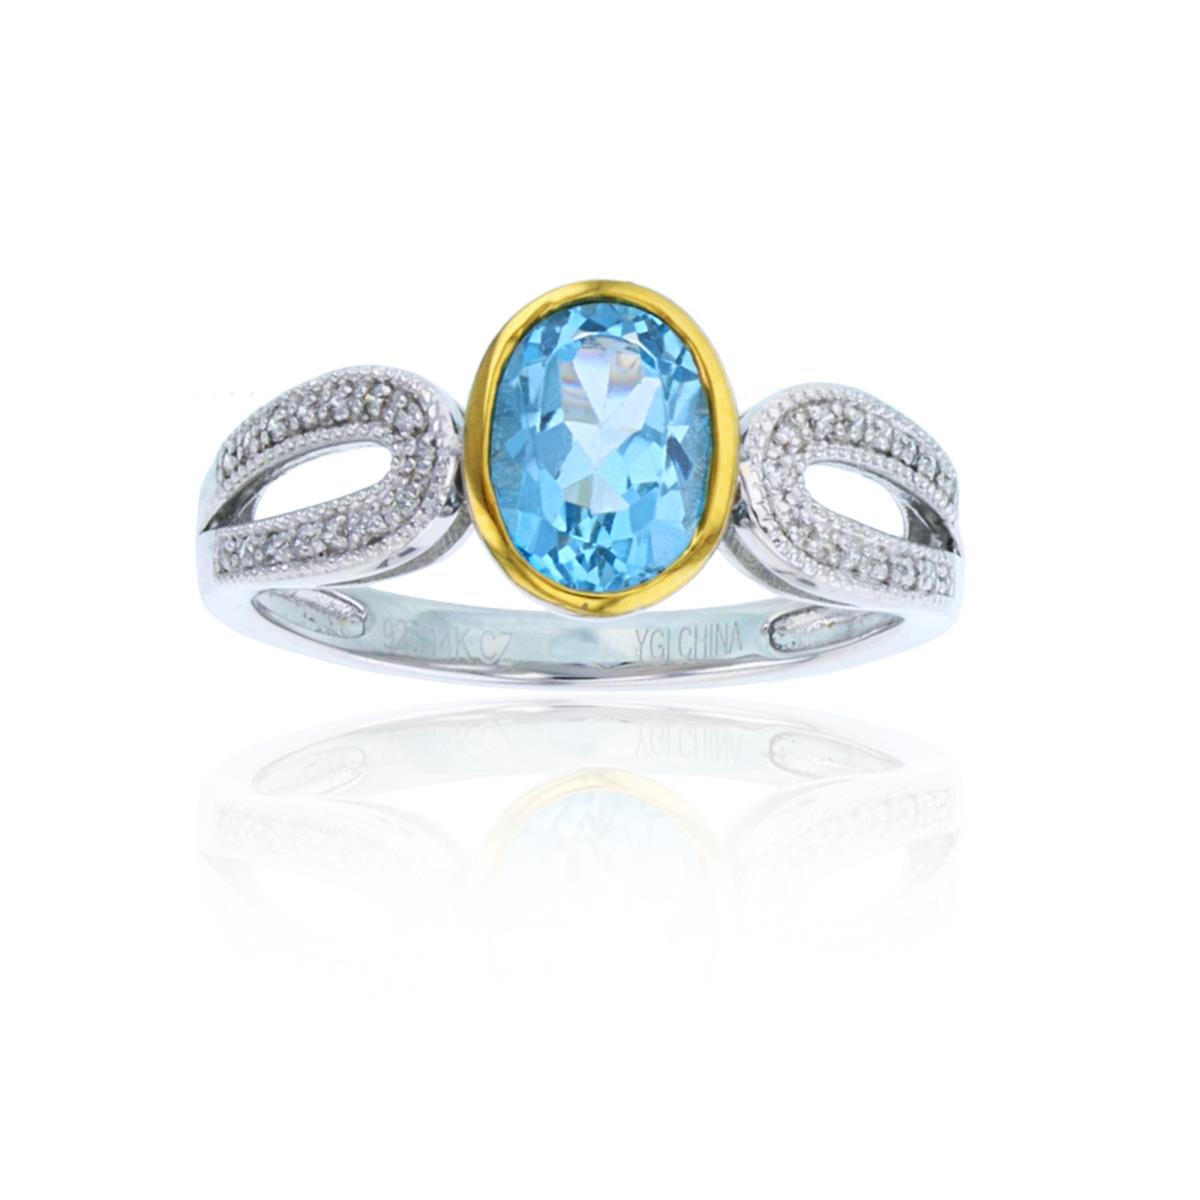 14K Yellow Gold & Sterling Silver Rhodium 0.10cttw Rnd Diamonds & 8x6mm Oval Bezel Swiss Blue Topaz Ring